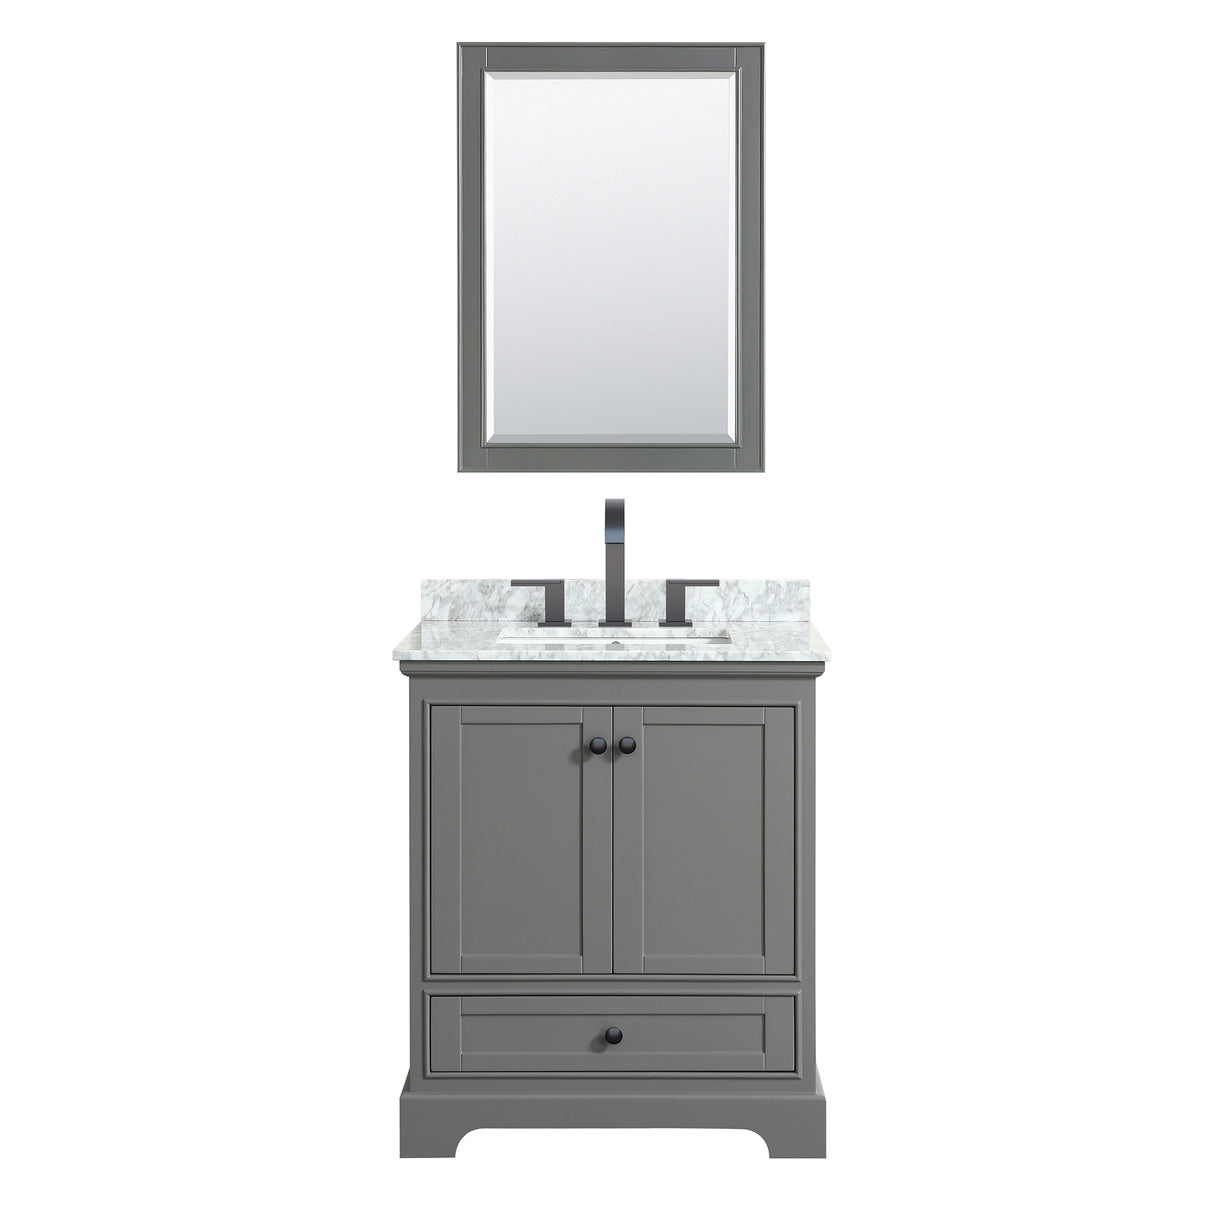 Deborah 30 Inch Single Bathroom Vanity in Dark Gray White Carrara Marble Countertop Undermount Square Sink Matte Black Trim 24 Inch Mirror